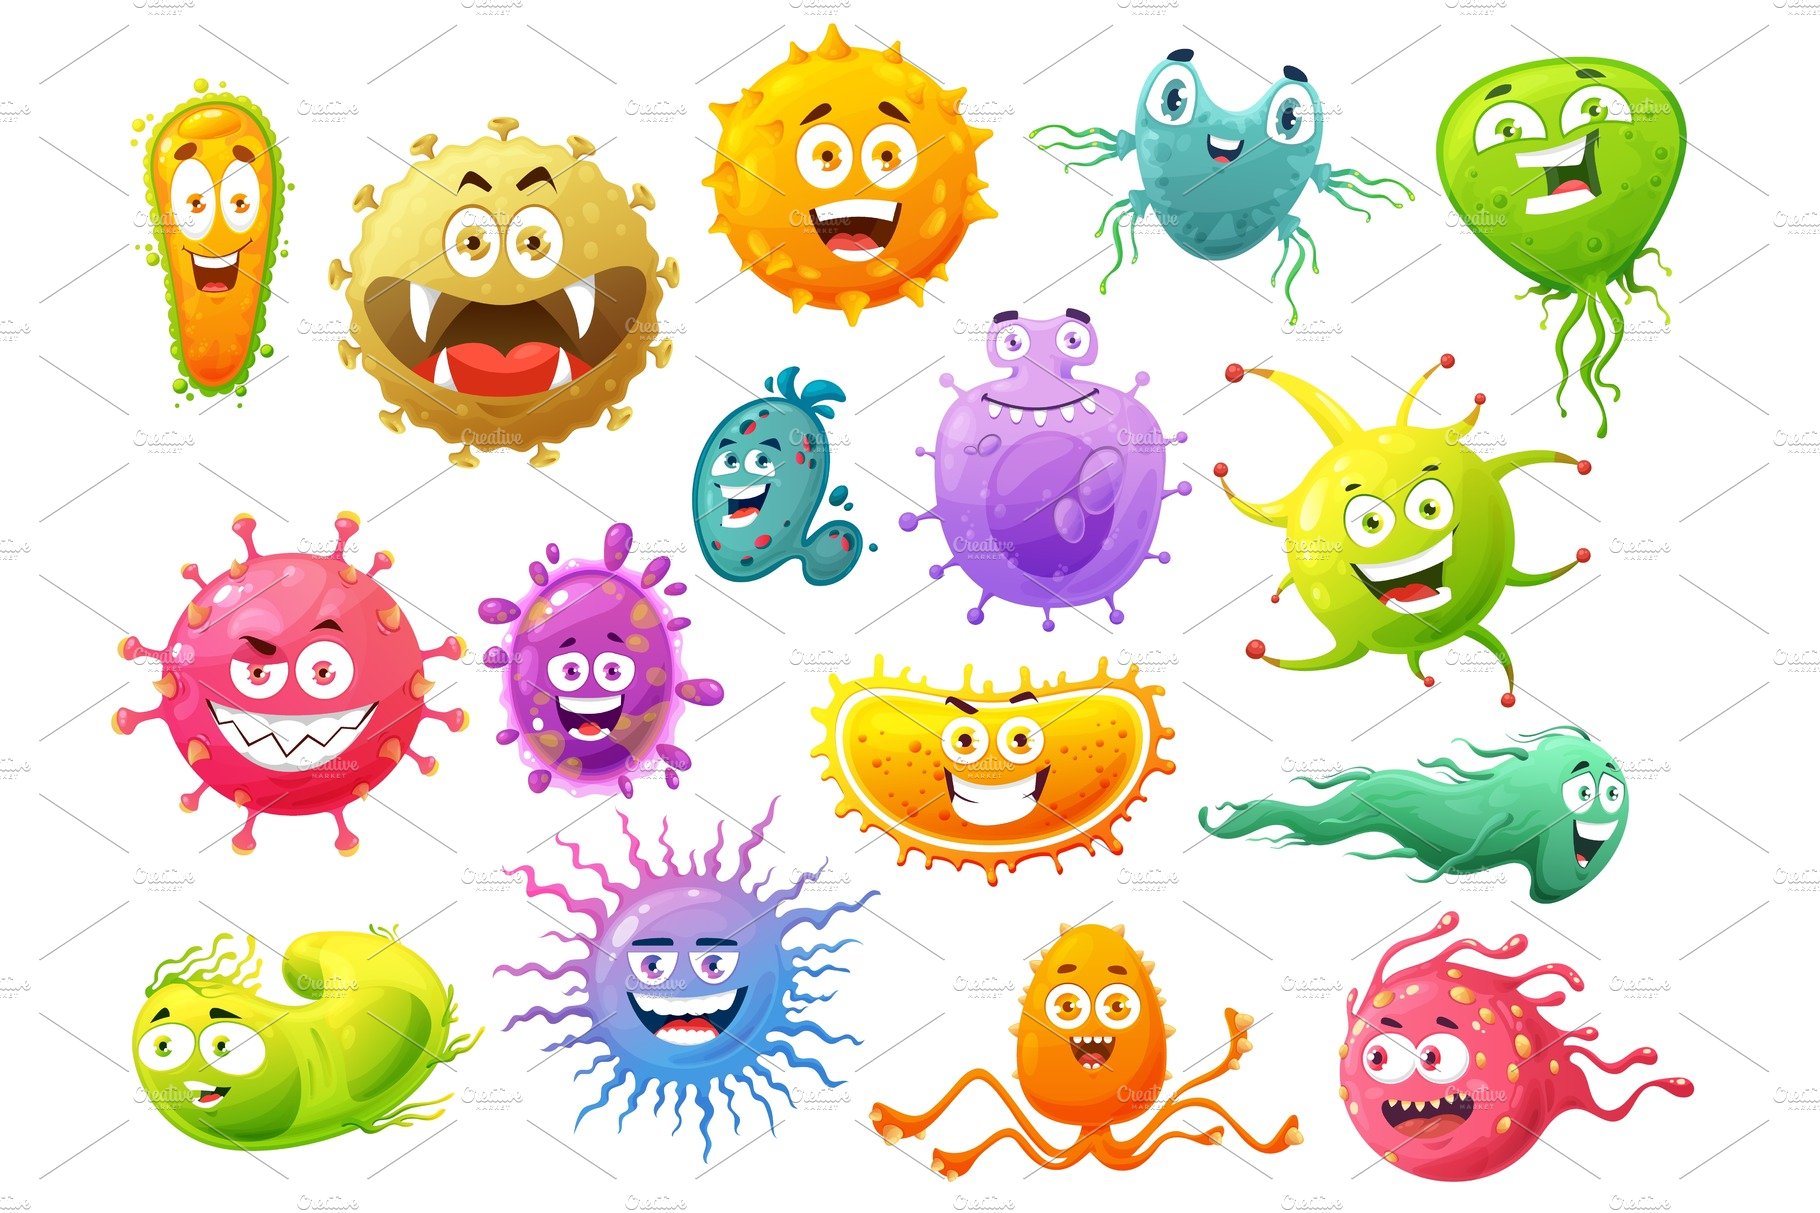 Cartoon virus, bacteria, germs cover image.